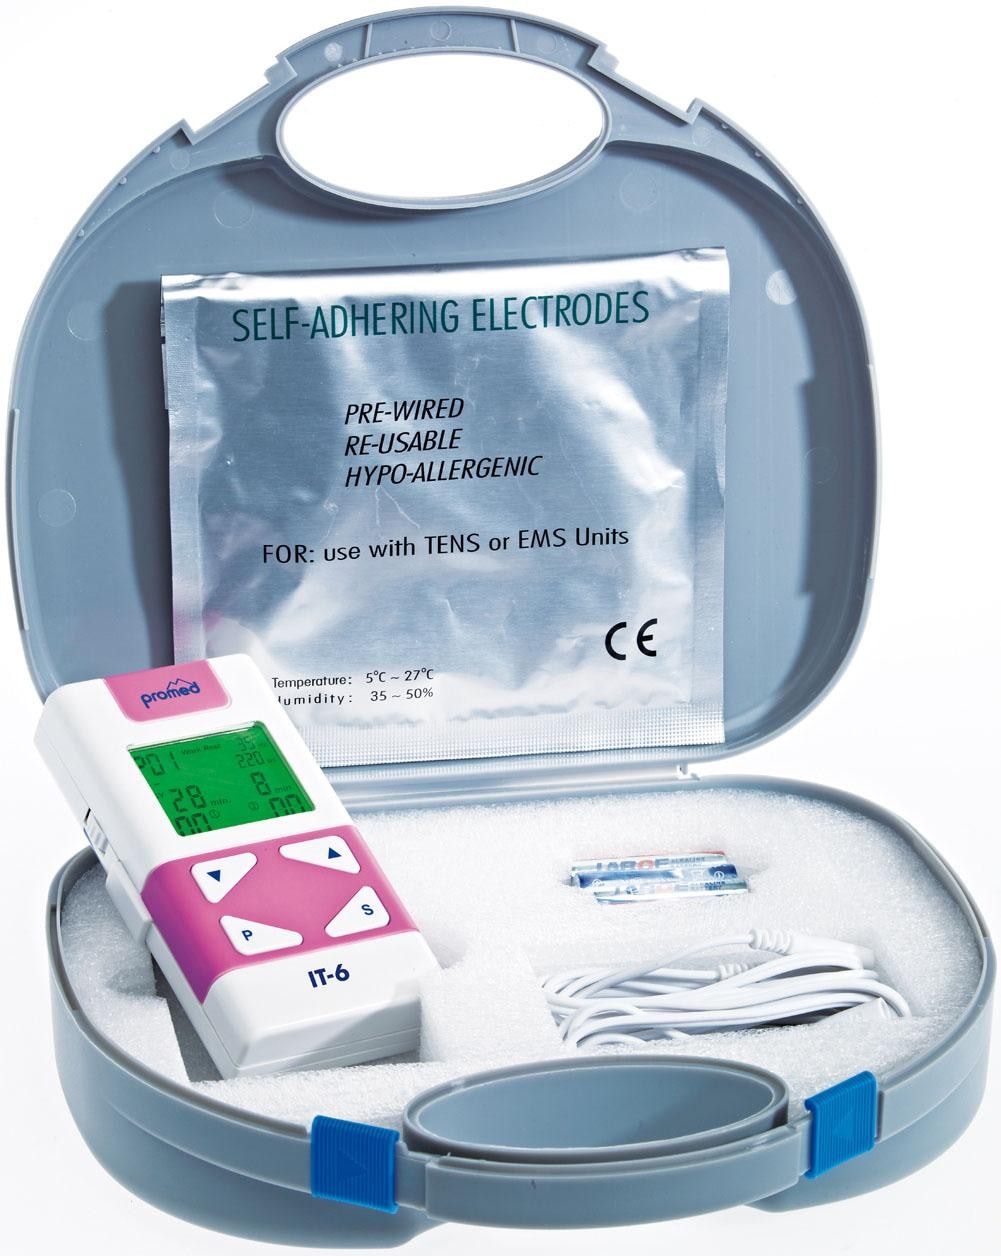 promed Beckenboden-Elektrostimulationsgerät »IT-6«, Inkontinenz-Therapiegerät